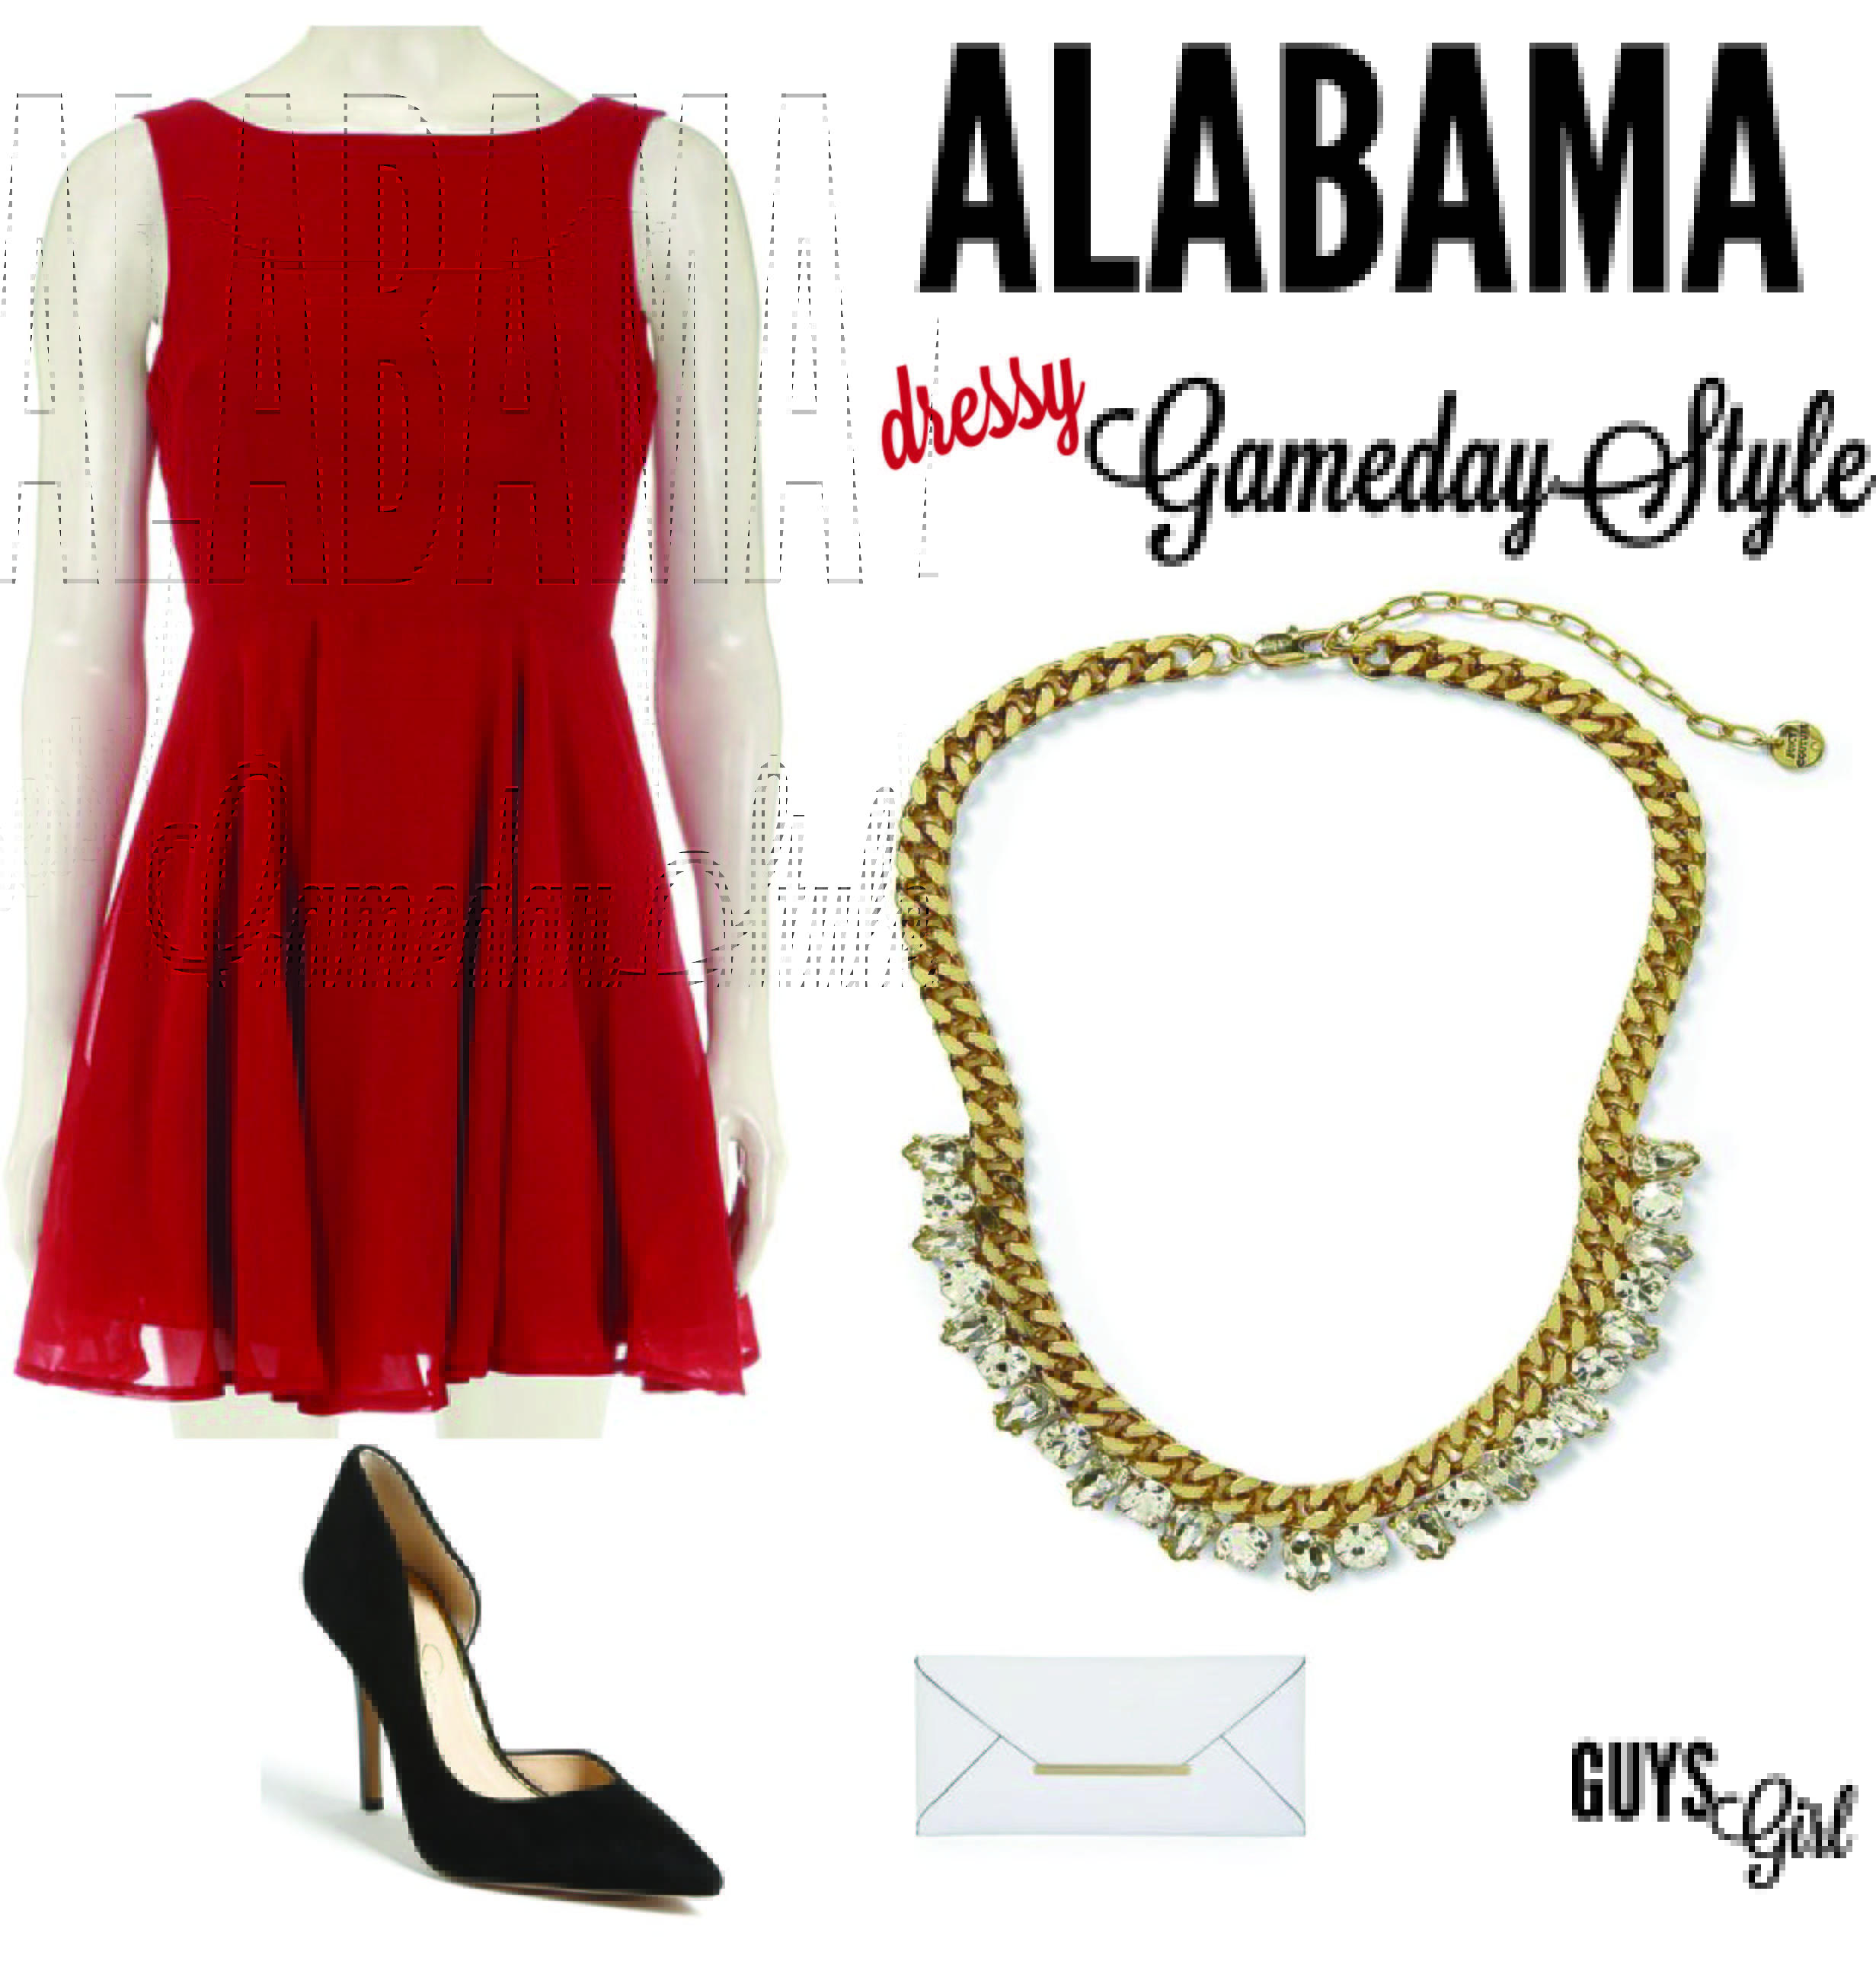 Alabama Dressy